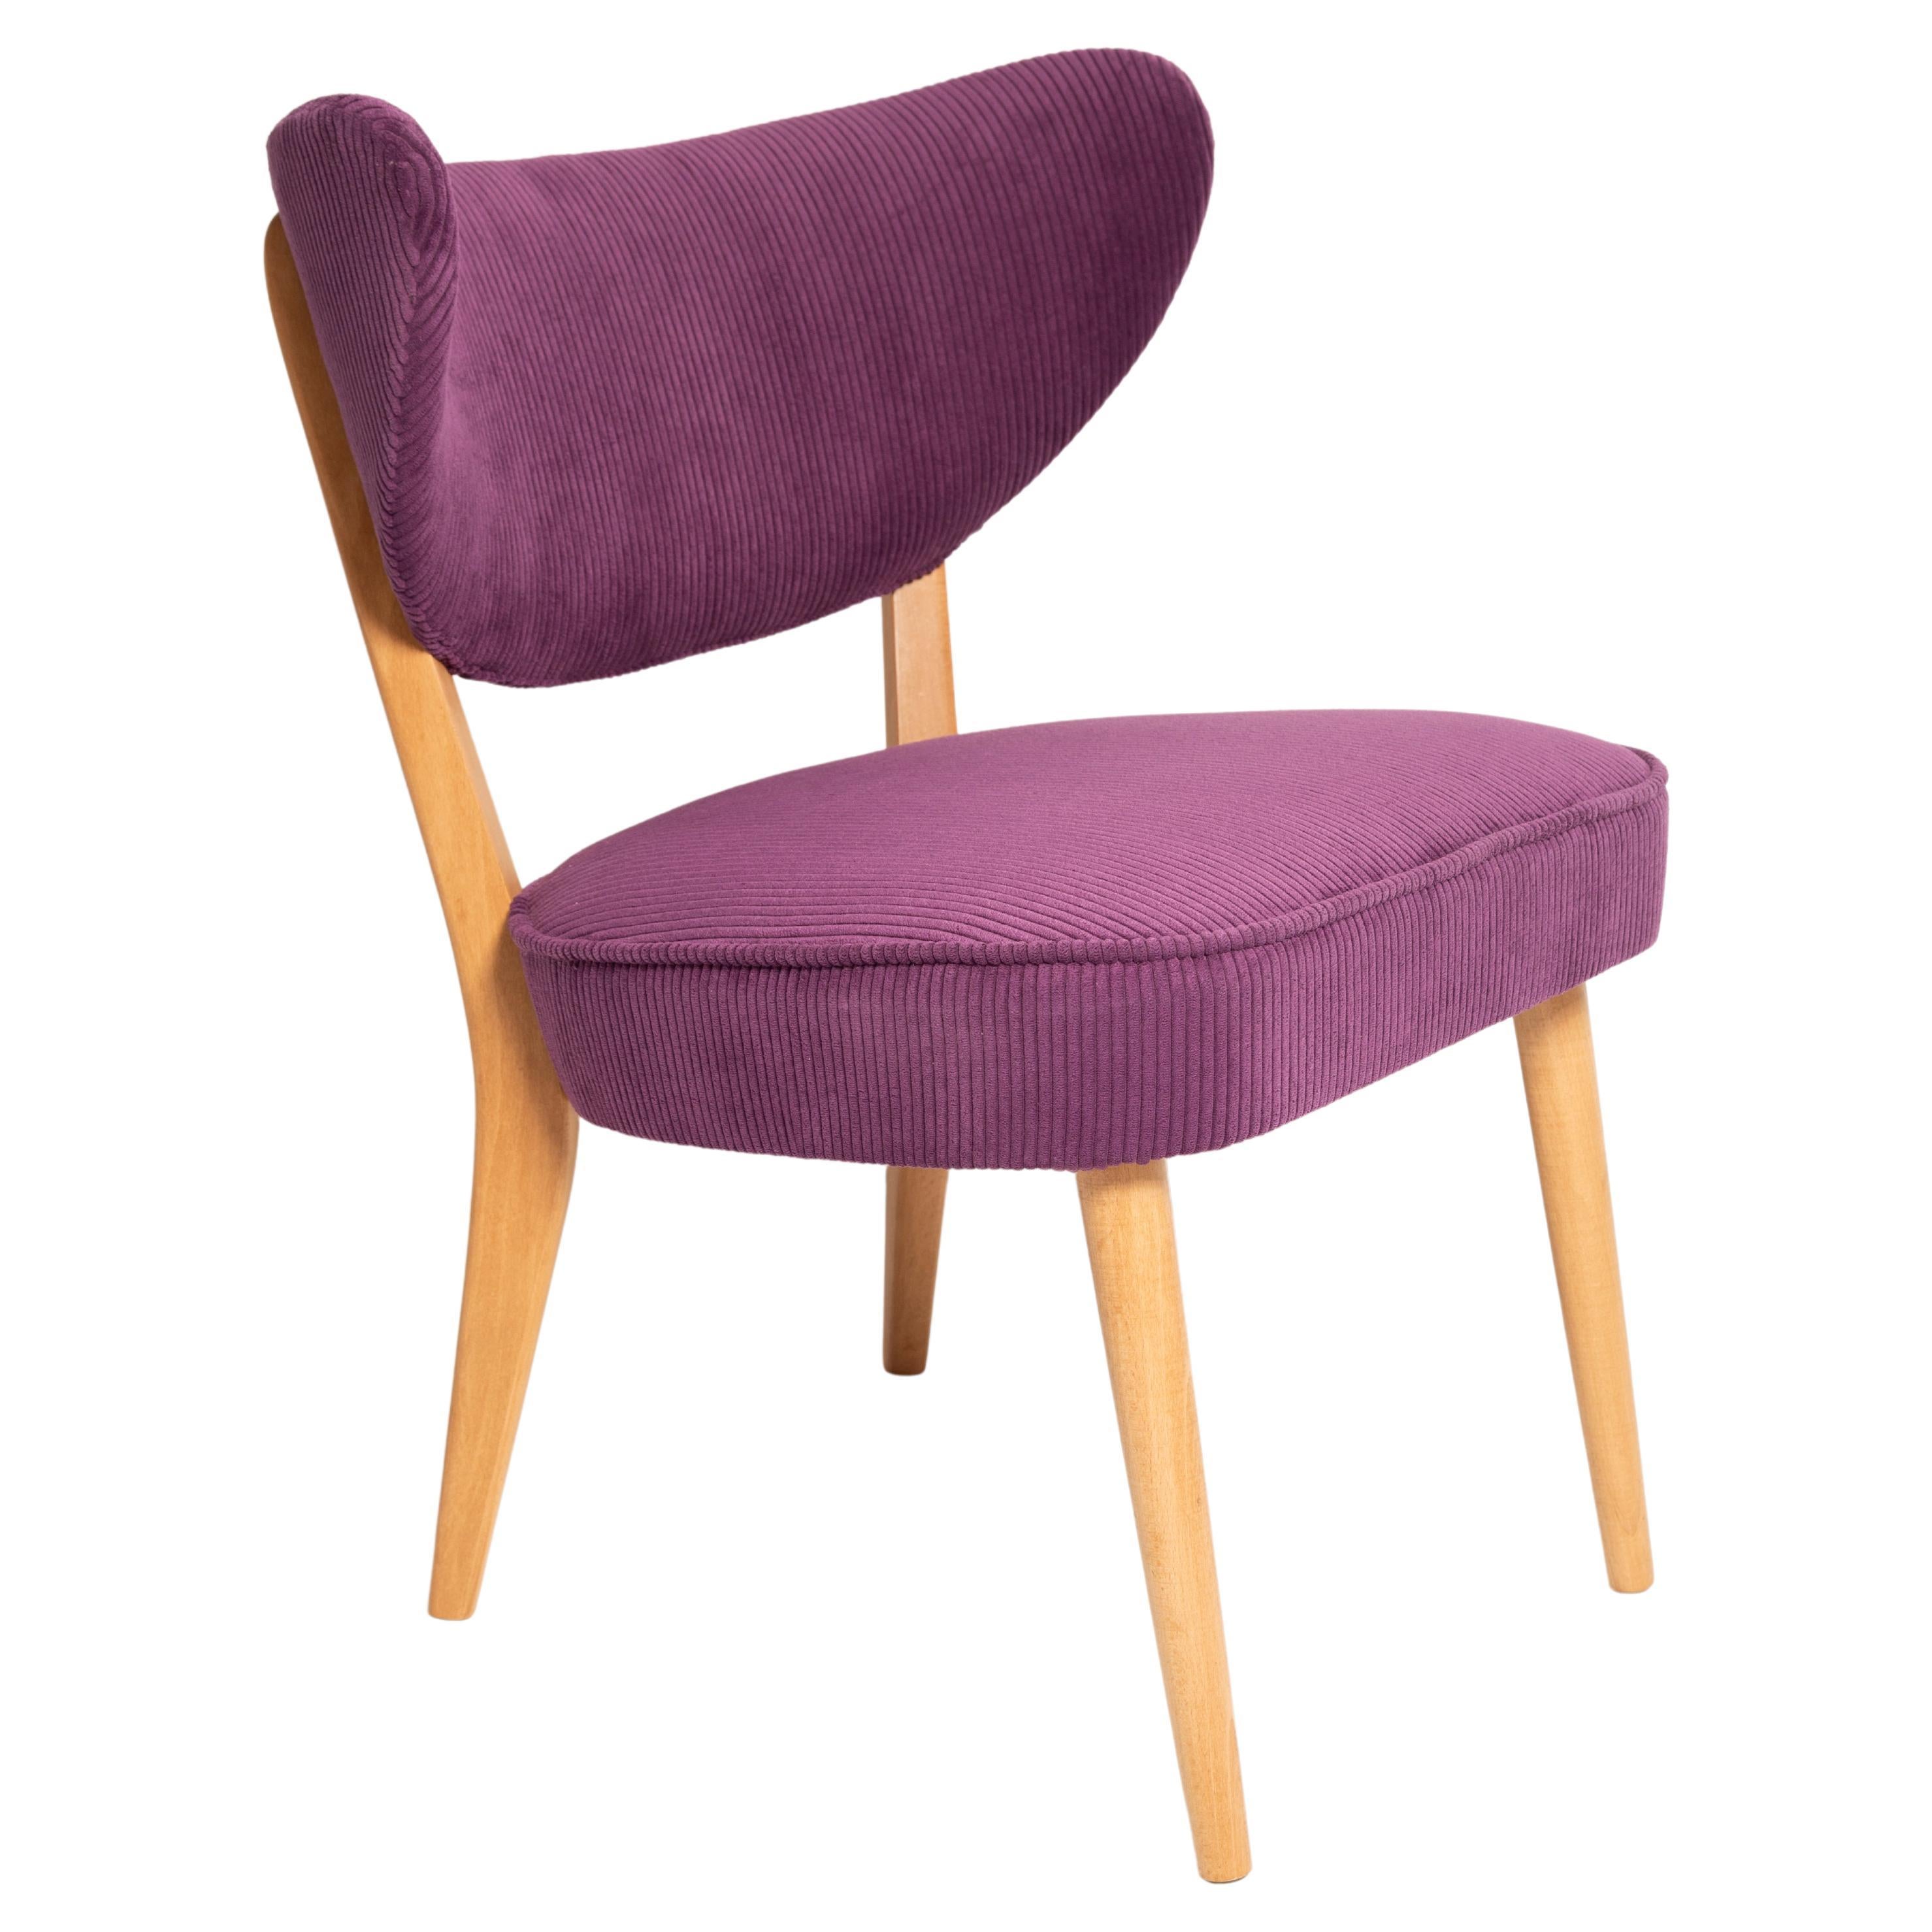 Midcentury Style Violet Velvet Club Chair, by Vintola Studio, Europe, Poland